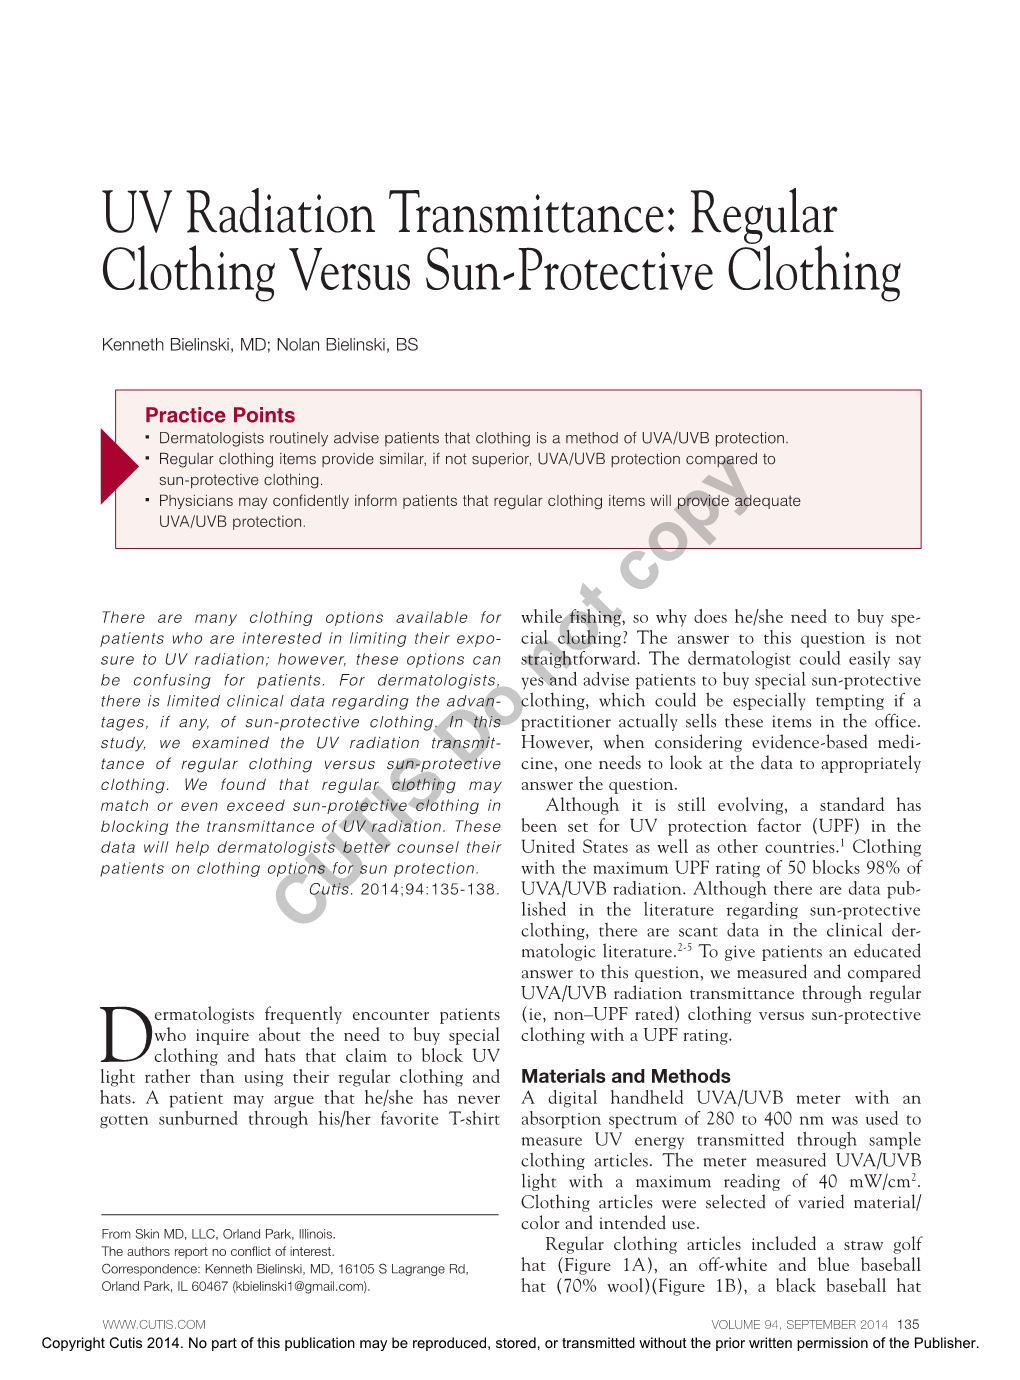 UV Radiation Transmittance: Regular Clothing Versus Sun-Protective Clothing